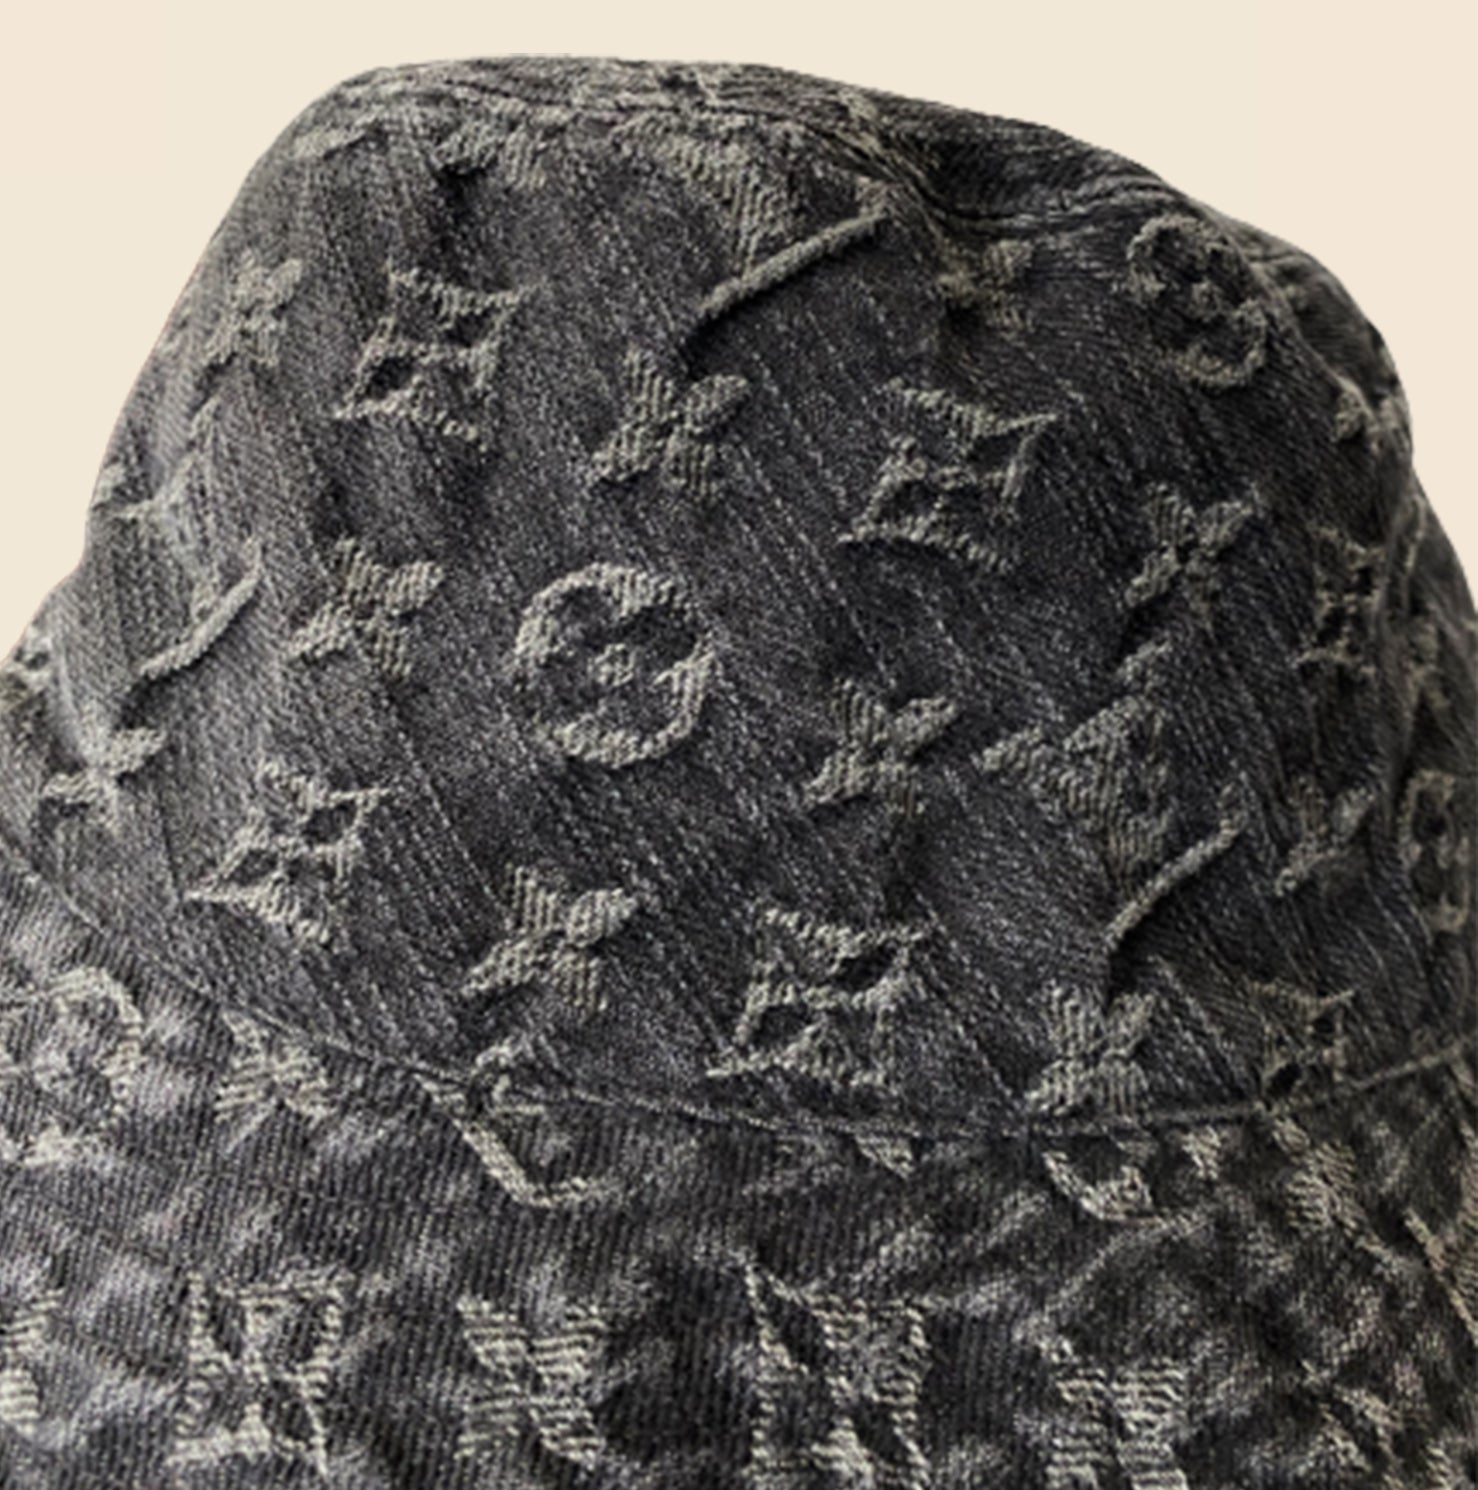 LV monogram blue jeans Bucket Hat – logofabrics